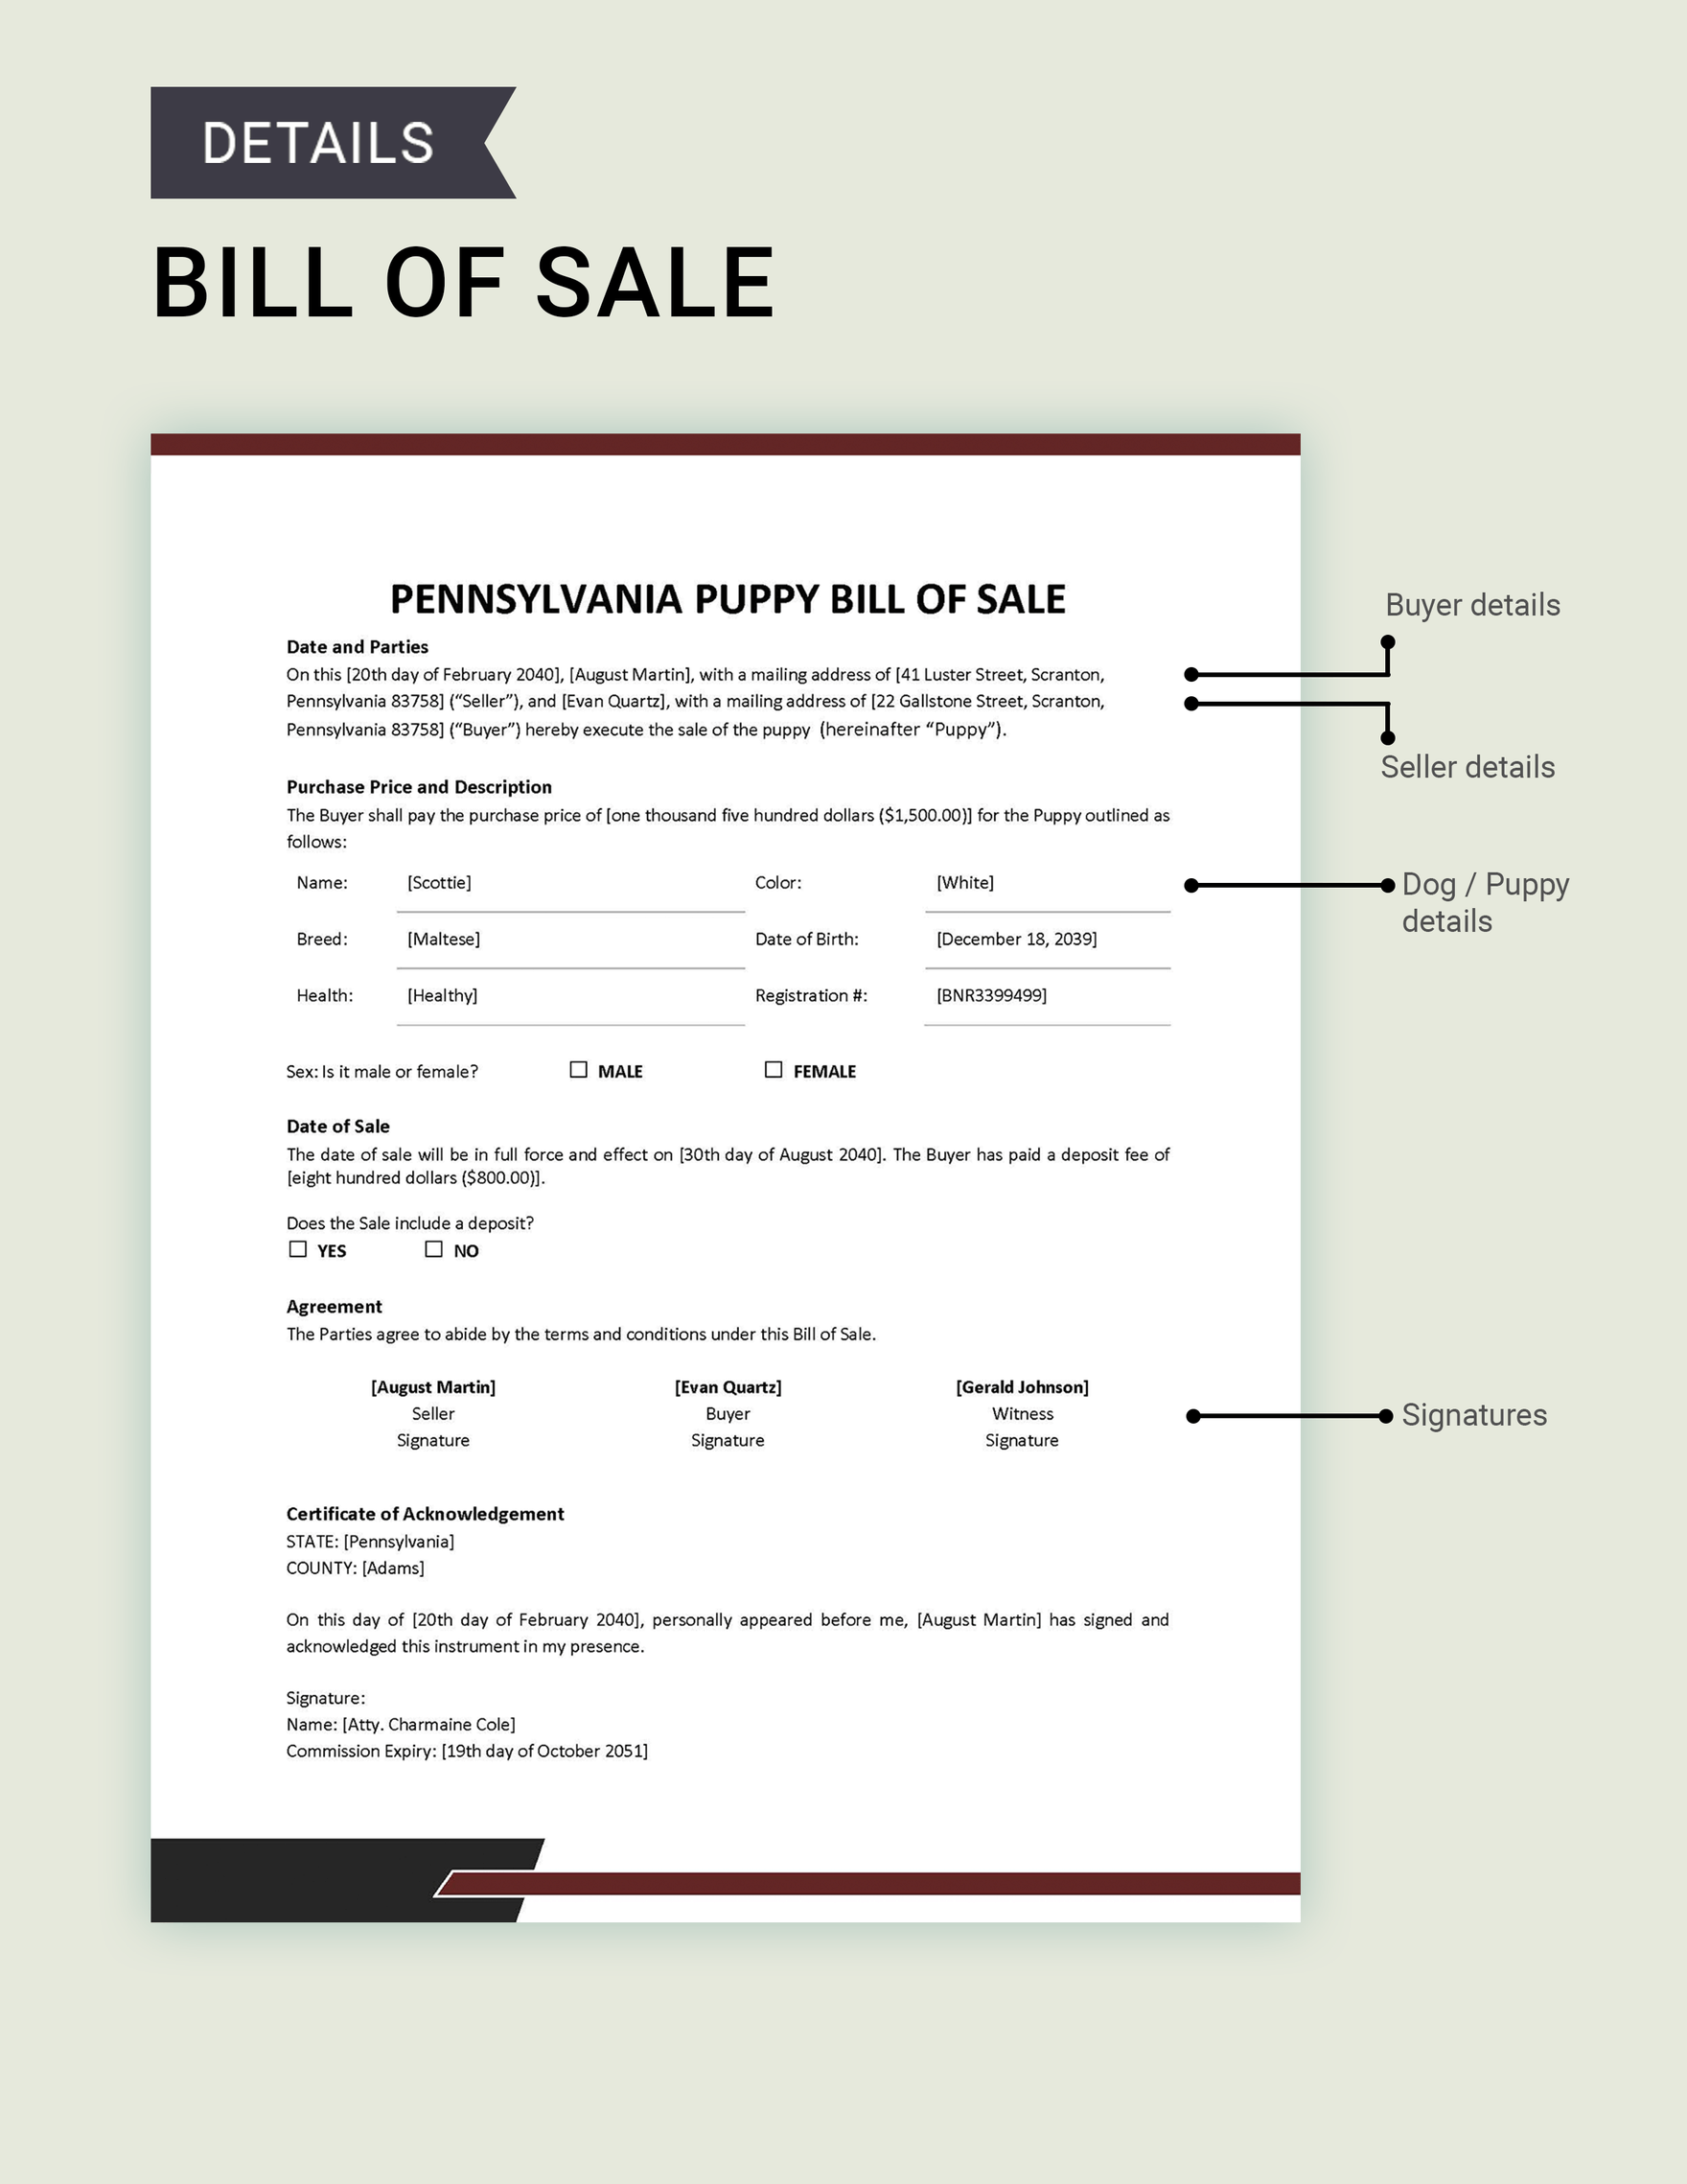 Pennsylvania Dog / Puppy Bill of Sale Template